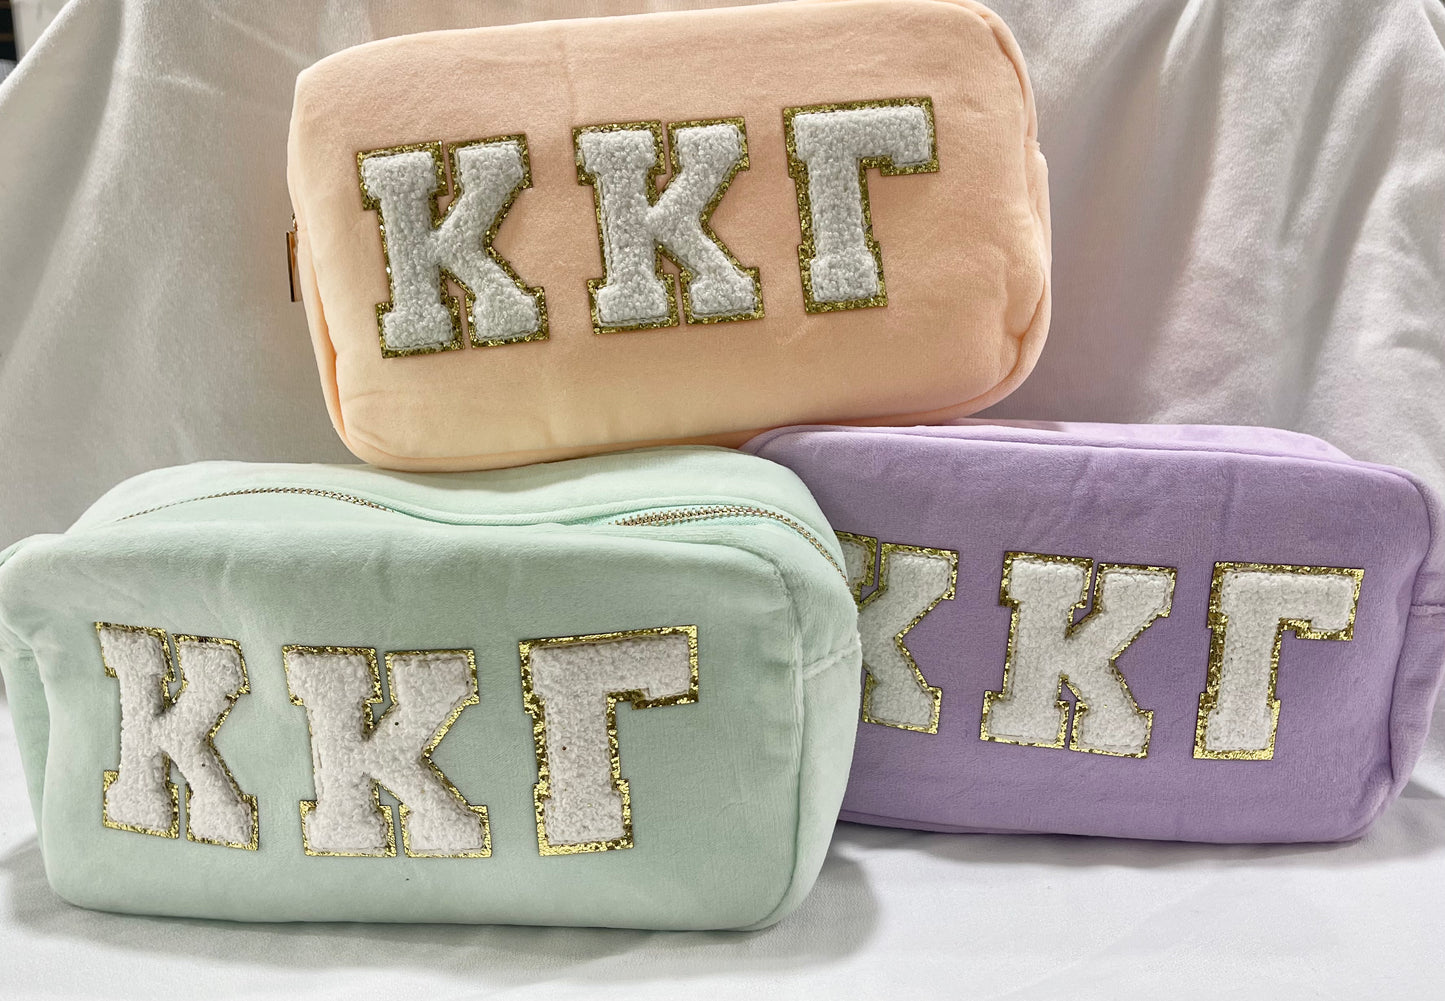 Kappa Kappa Gamma Chenille Cosmetic Bag